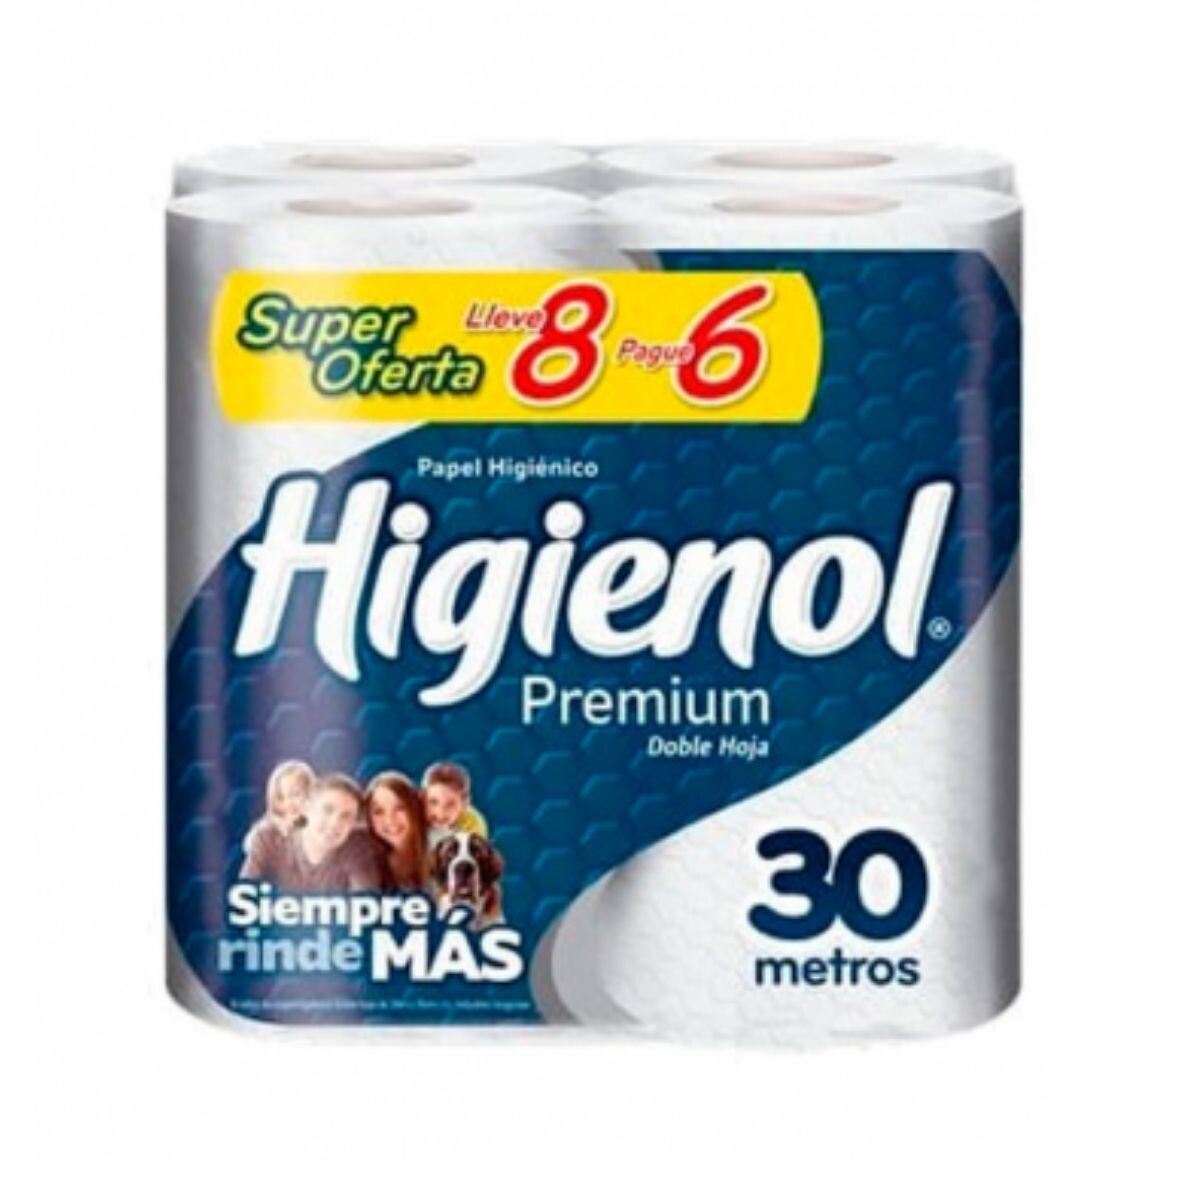 Papel Higiénico Higienol Premium - 30 MT 8X6 